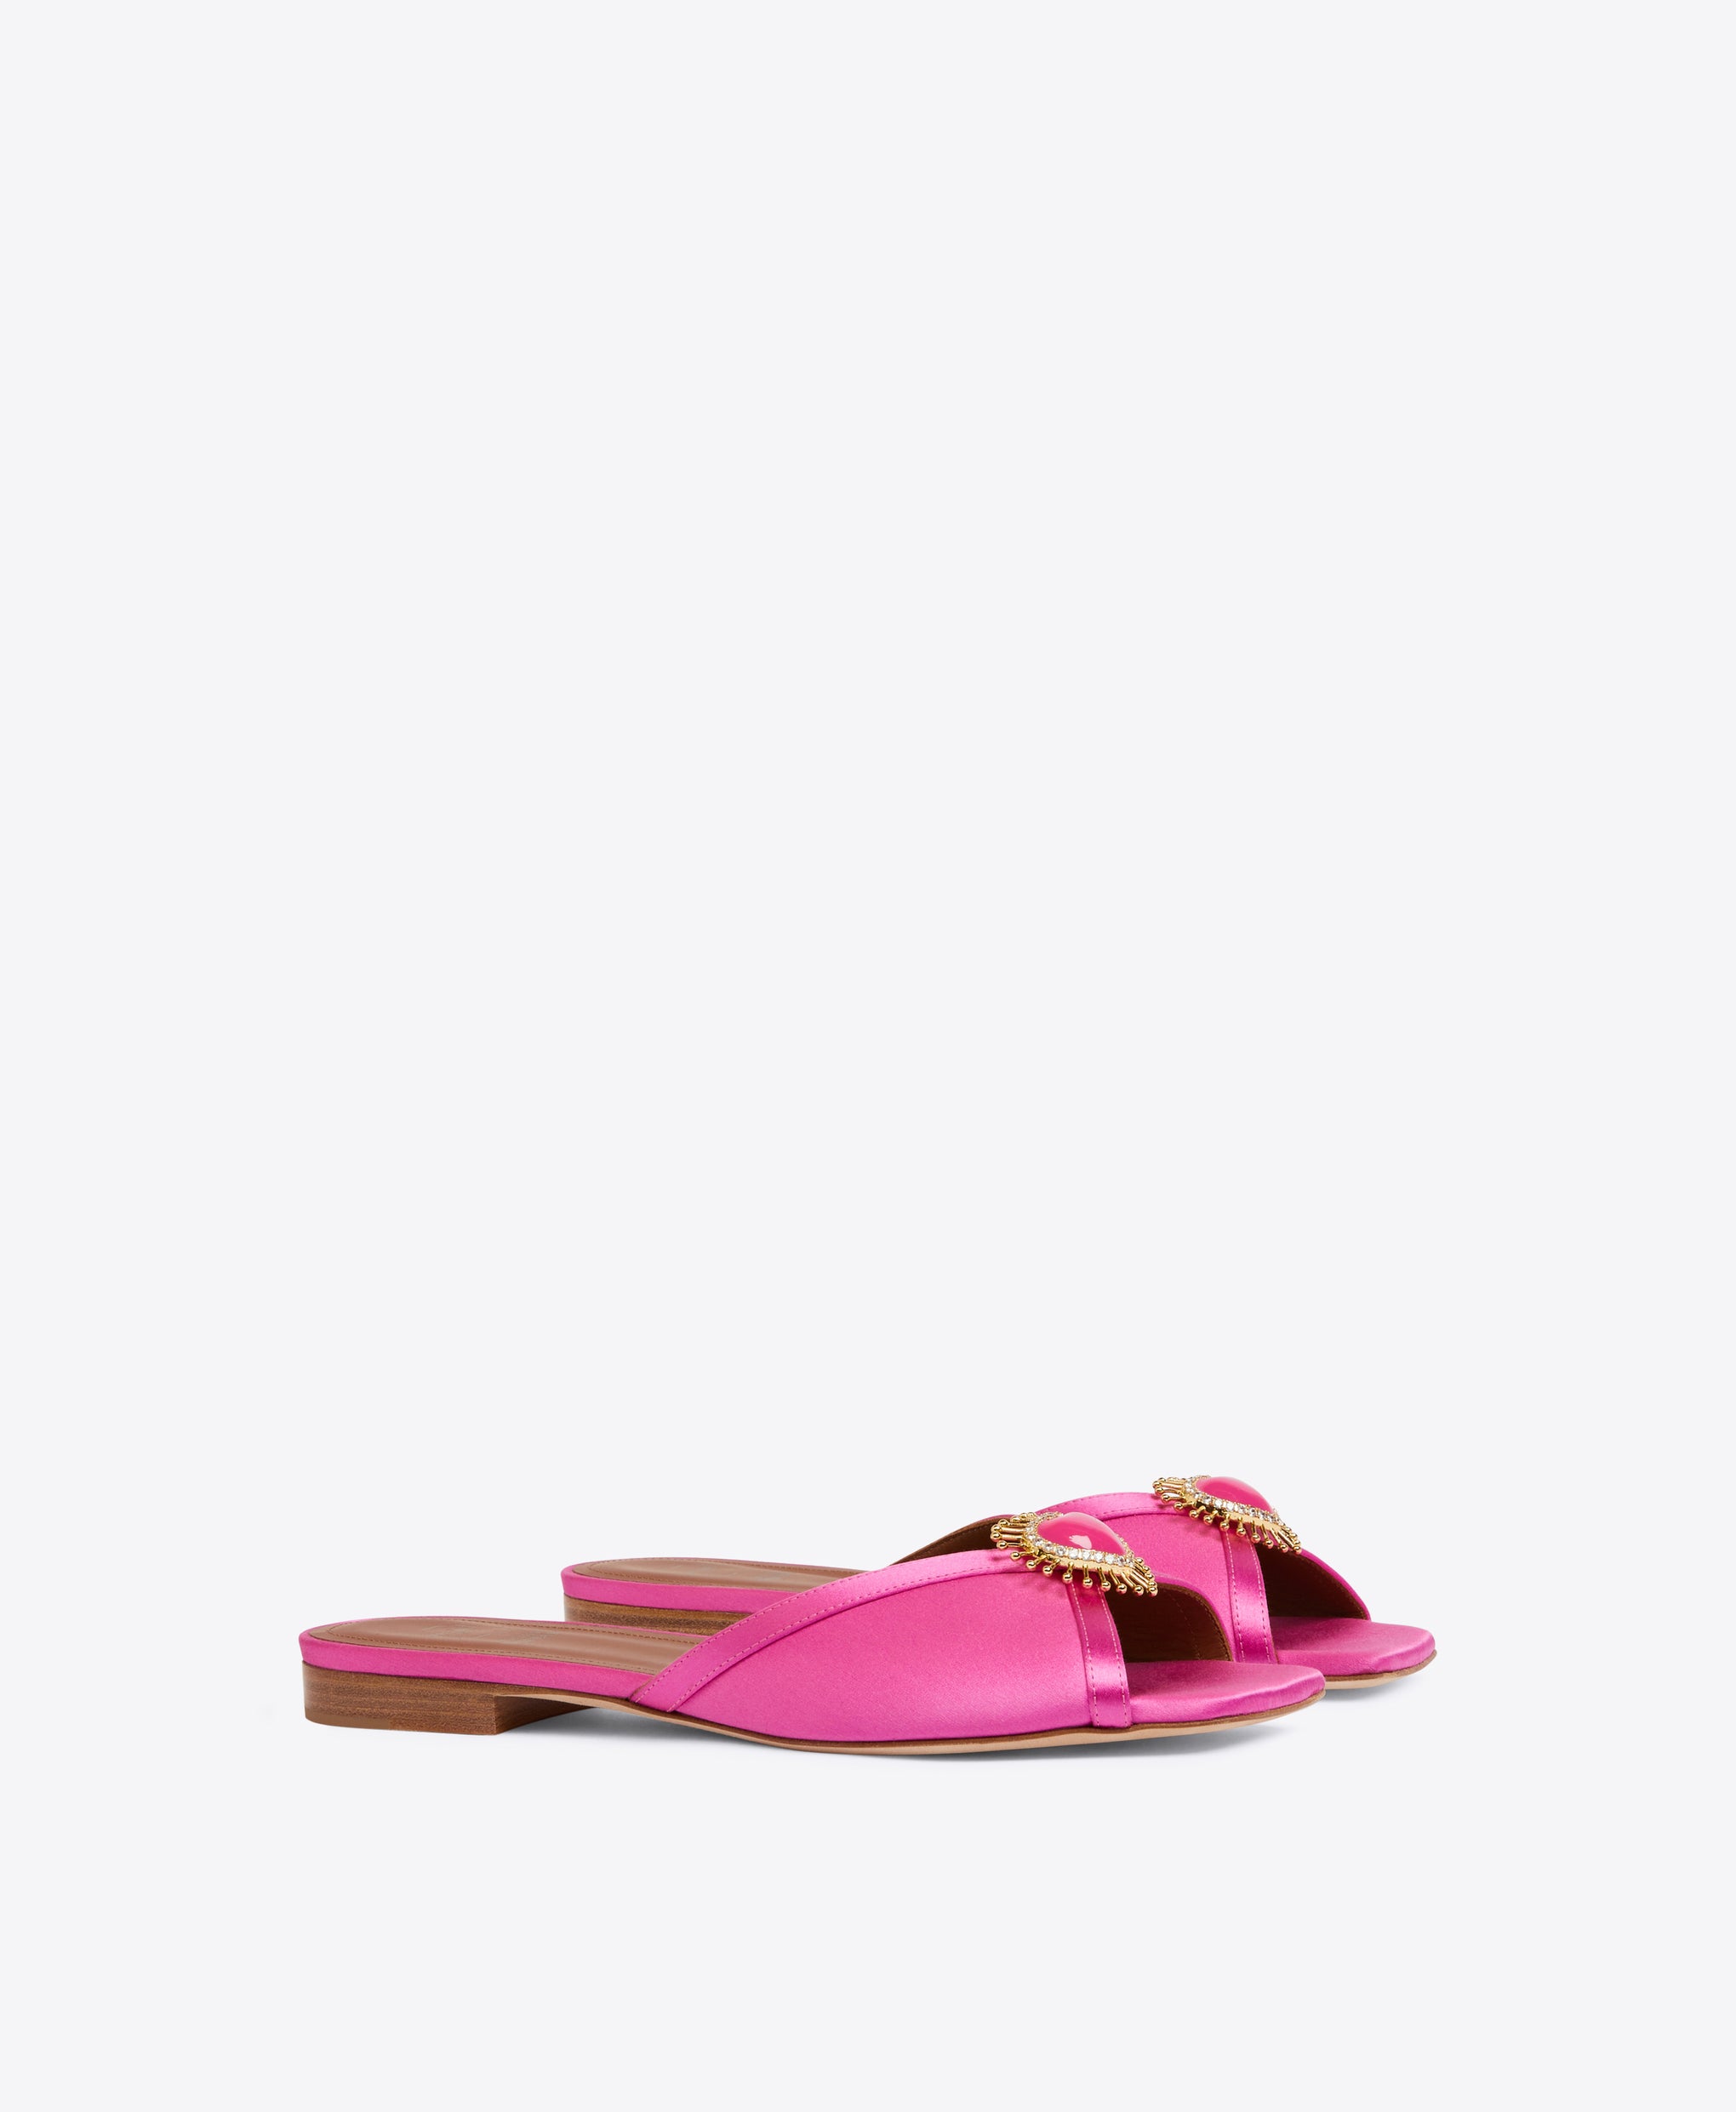 Women's Pink Satin Flat Sandals Malone Souliers